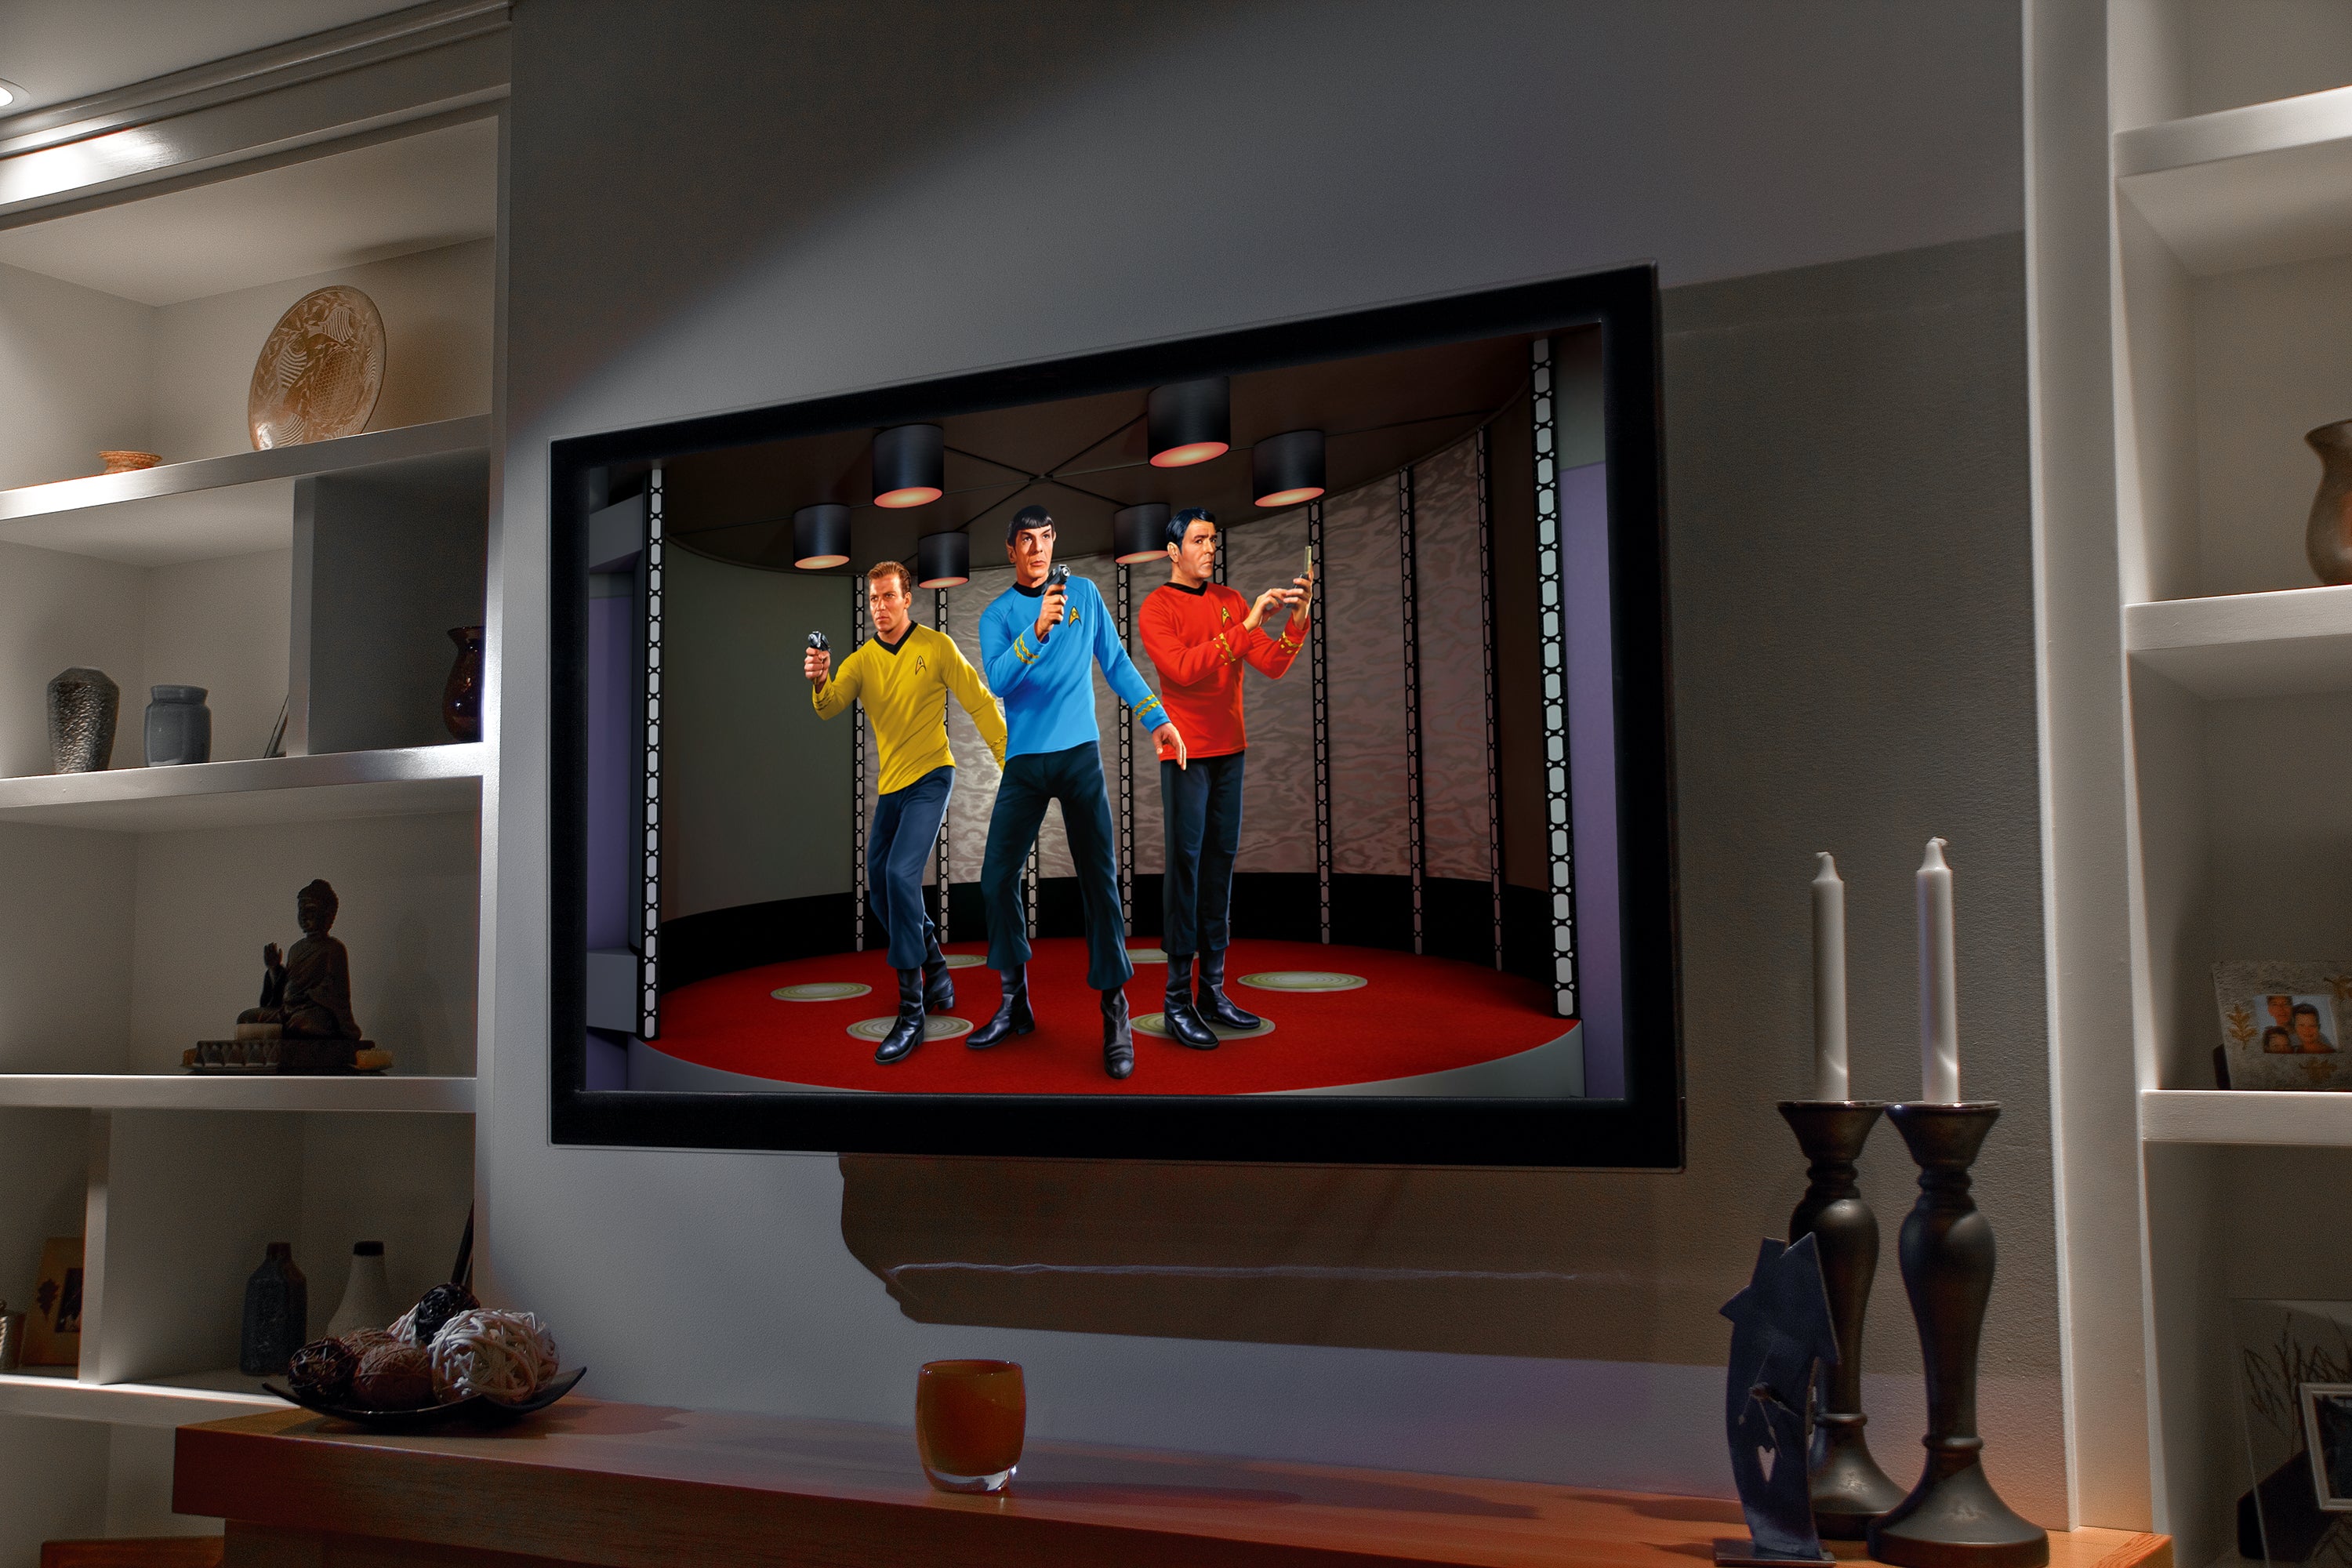 The Original Series crew decorating a living room TV